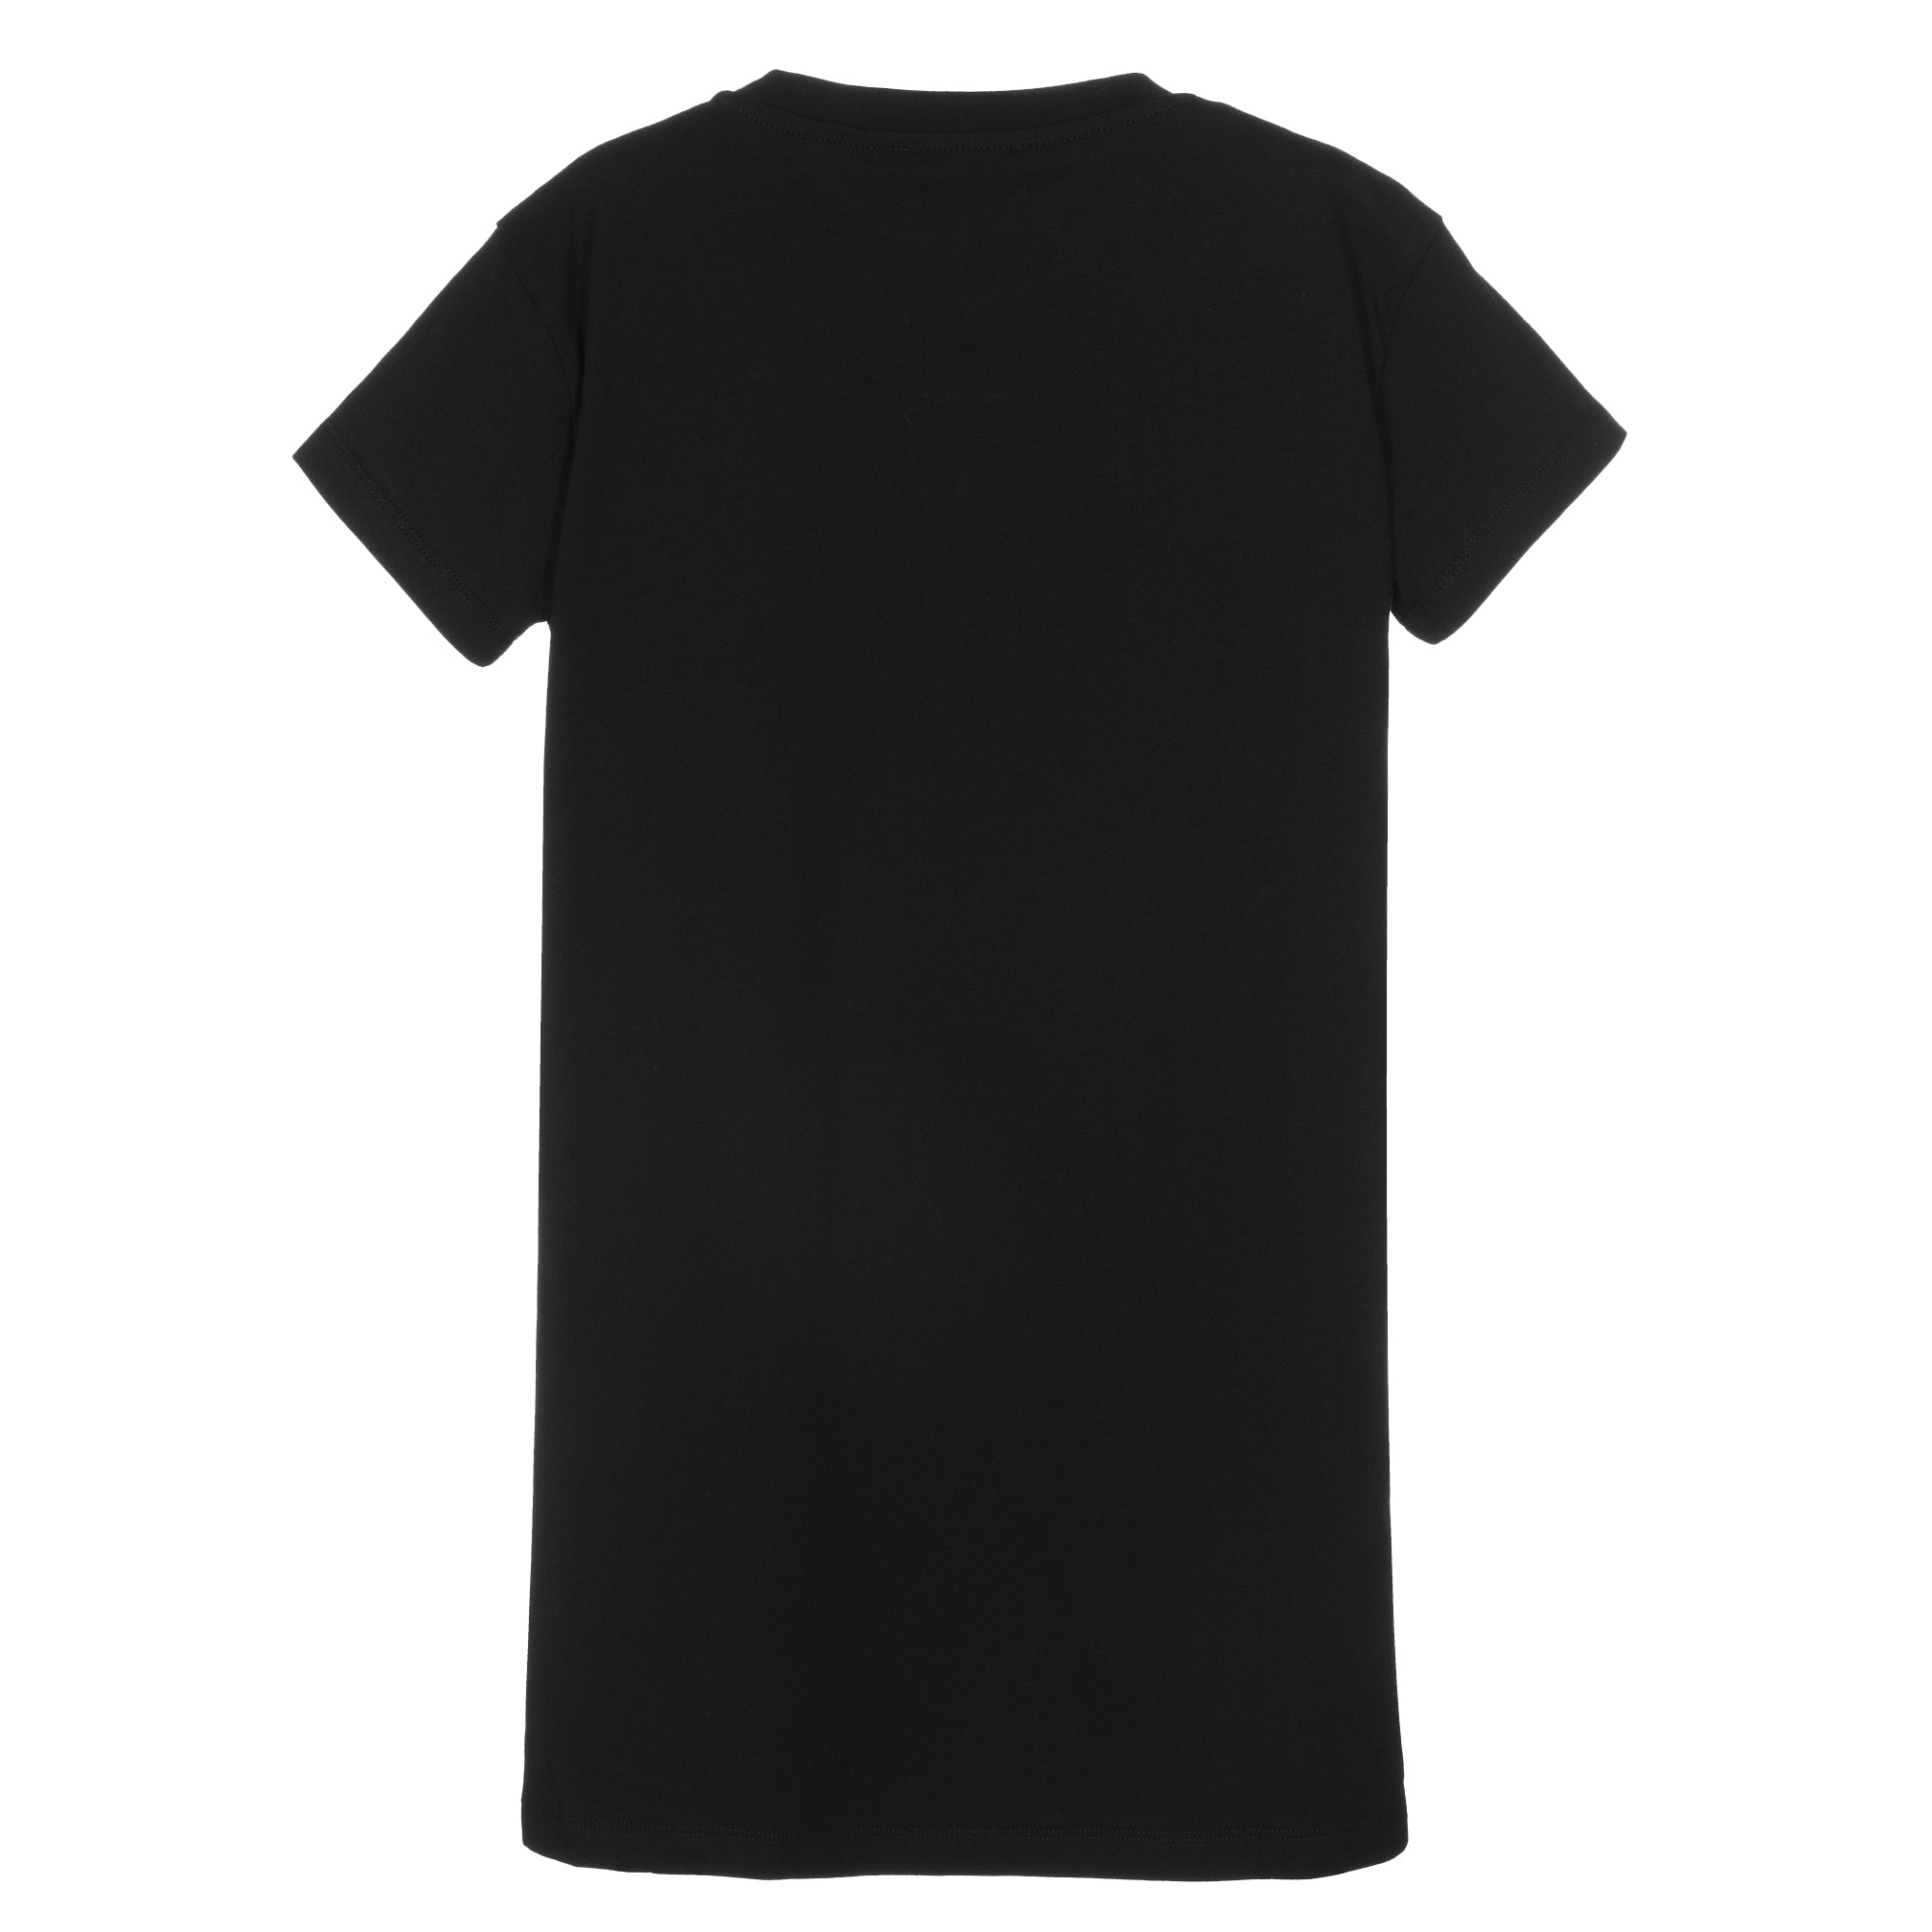 Balmain Black T-Shirt Dress